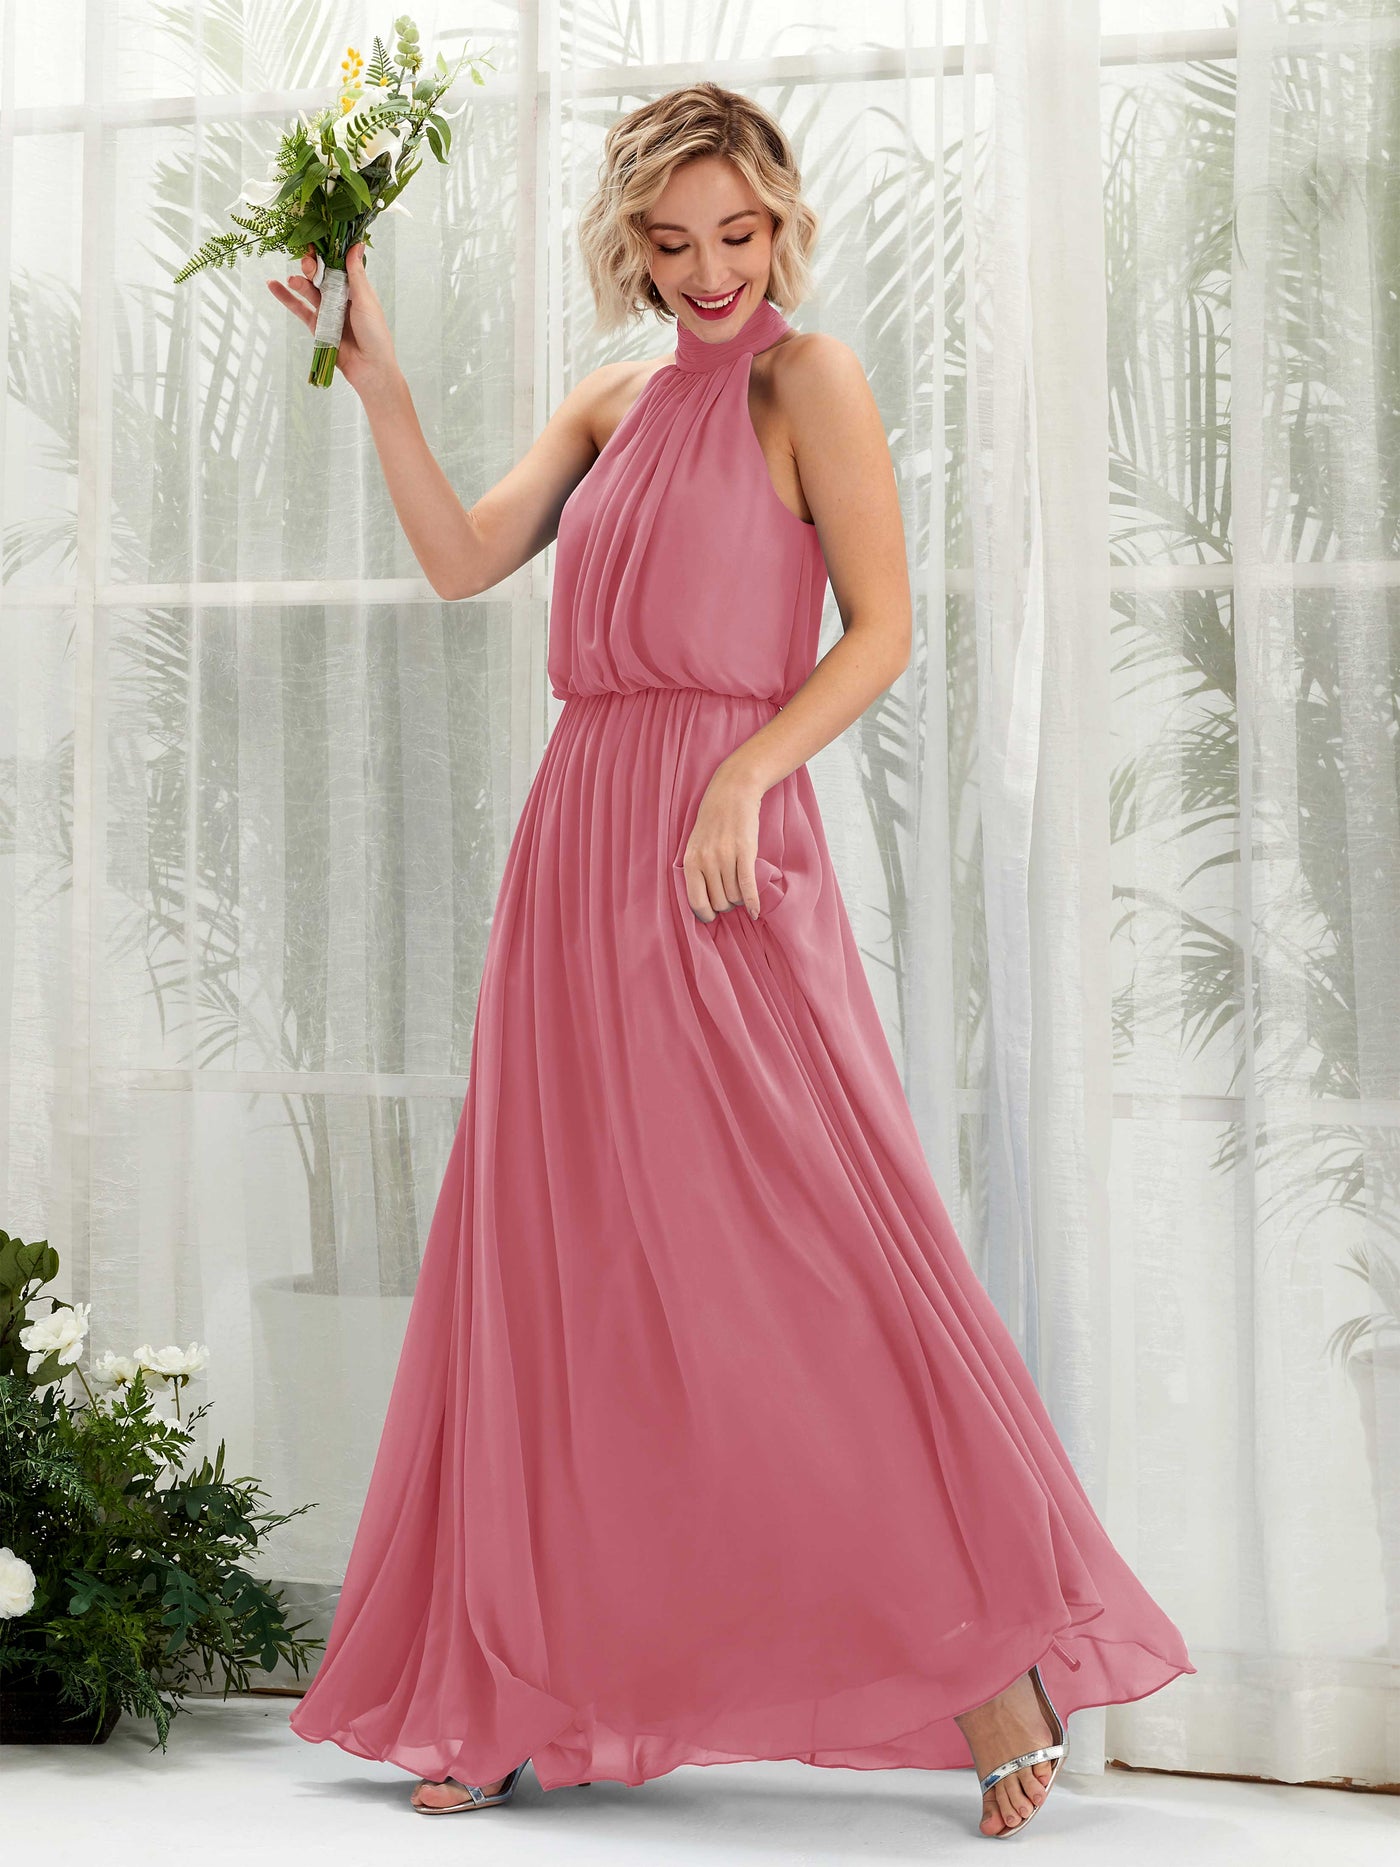 Desert Rose Bridesmaid Dresses Bridesmaid Dress A-line Chiffon Halter Full Length Sleeveless Wedding Party Dress (81222911)#color_desert-rose